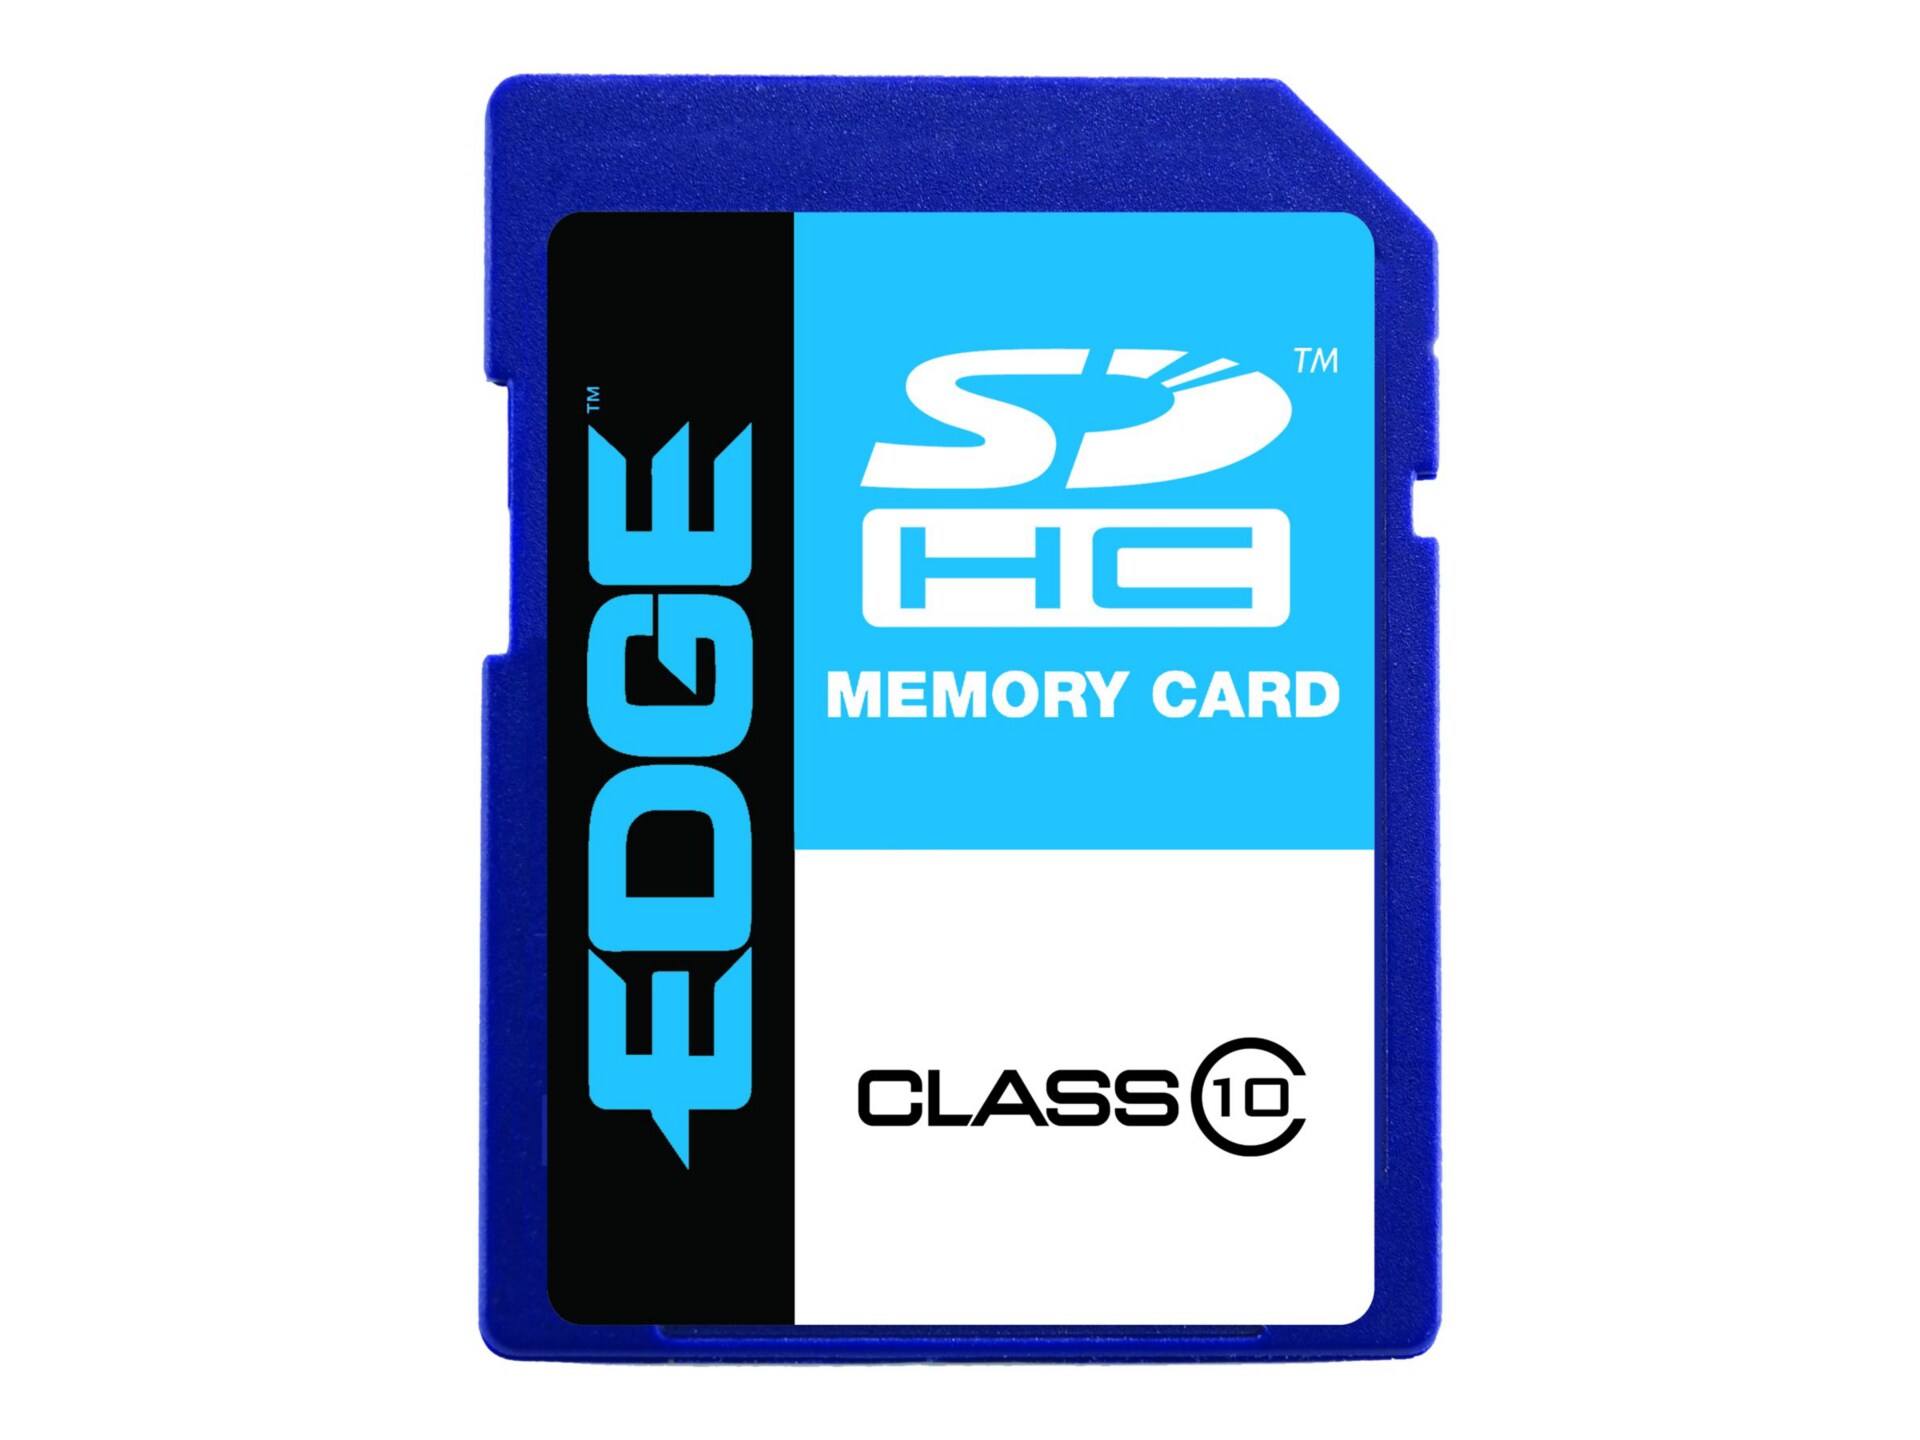 Edge 8GB ProShot SDHC Class 10 Memory Card
